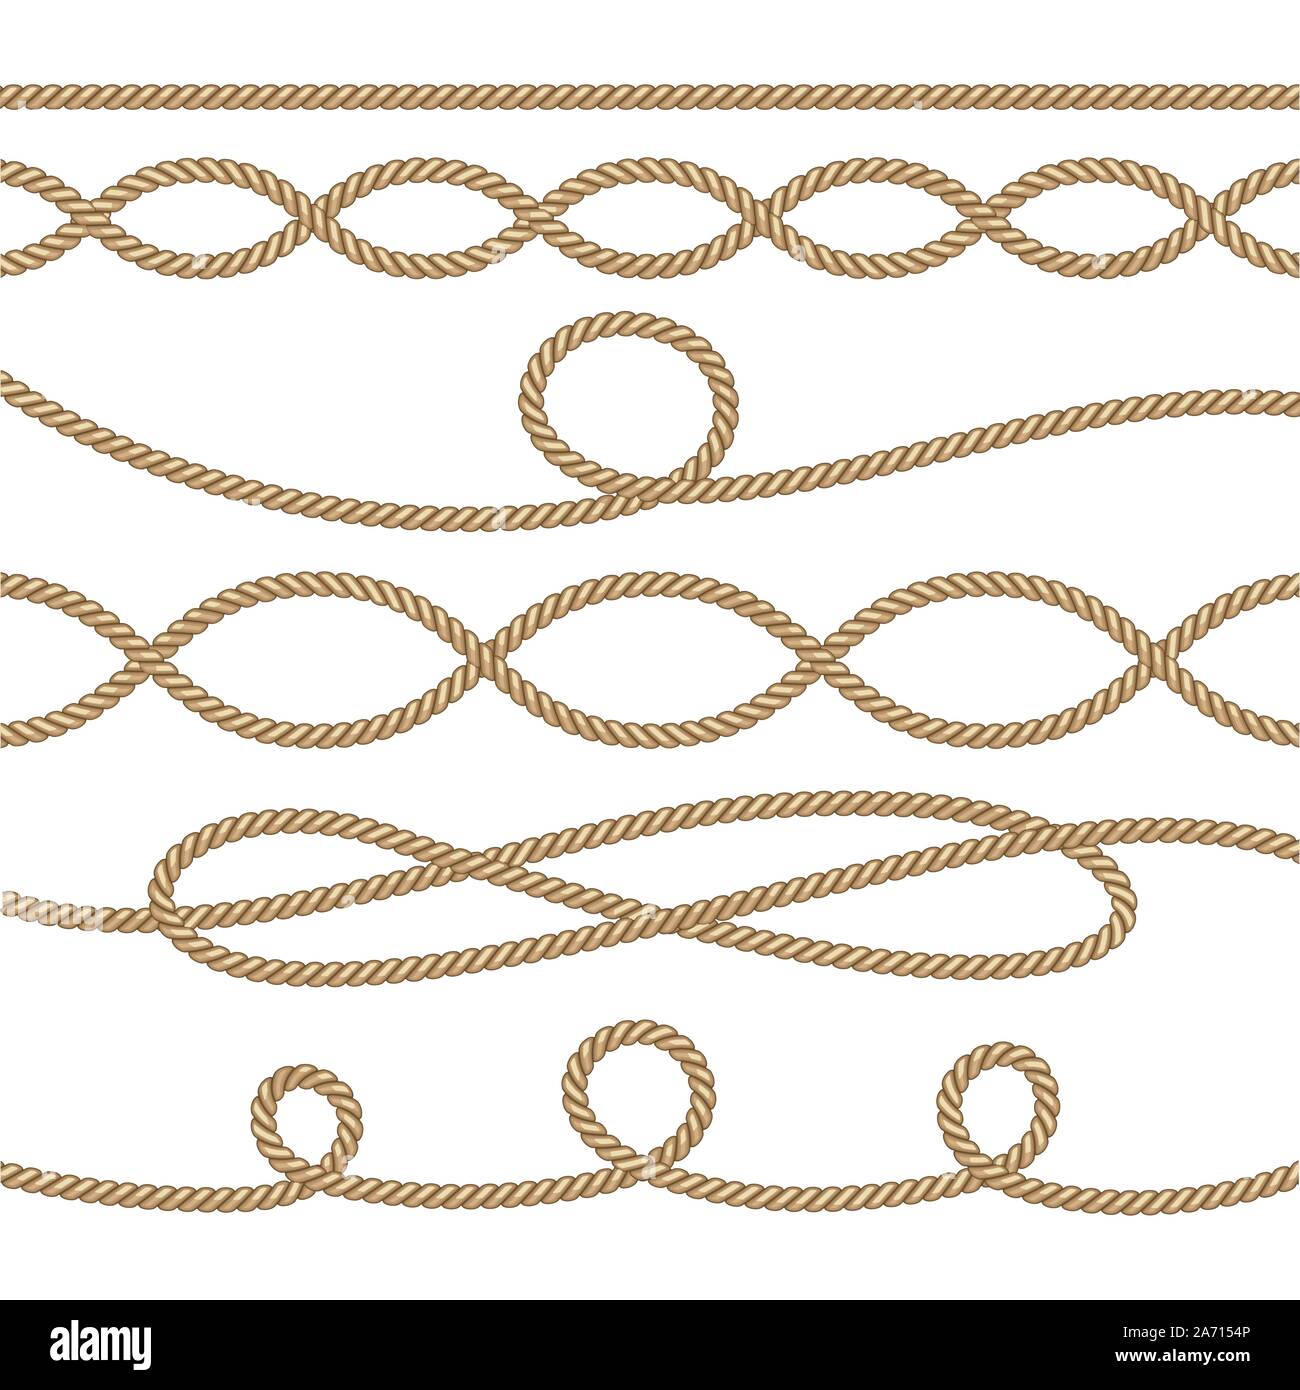 Nautical ropes. Sailing decoration elements. Rope marine vector illustration Stock Vector